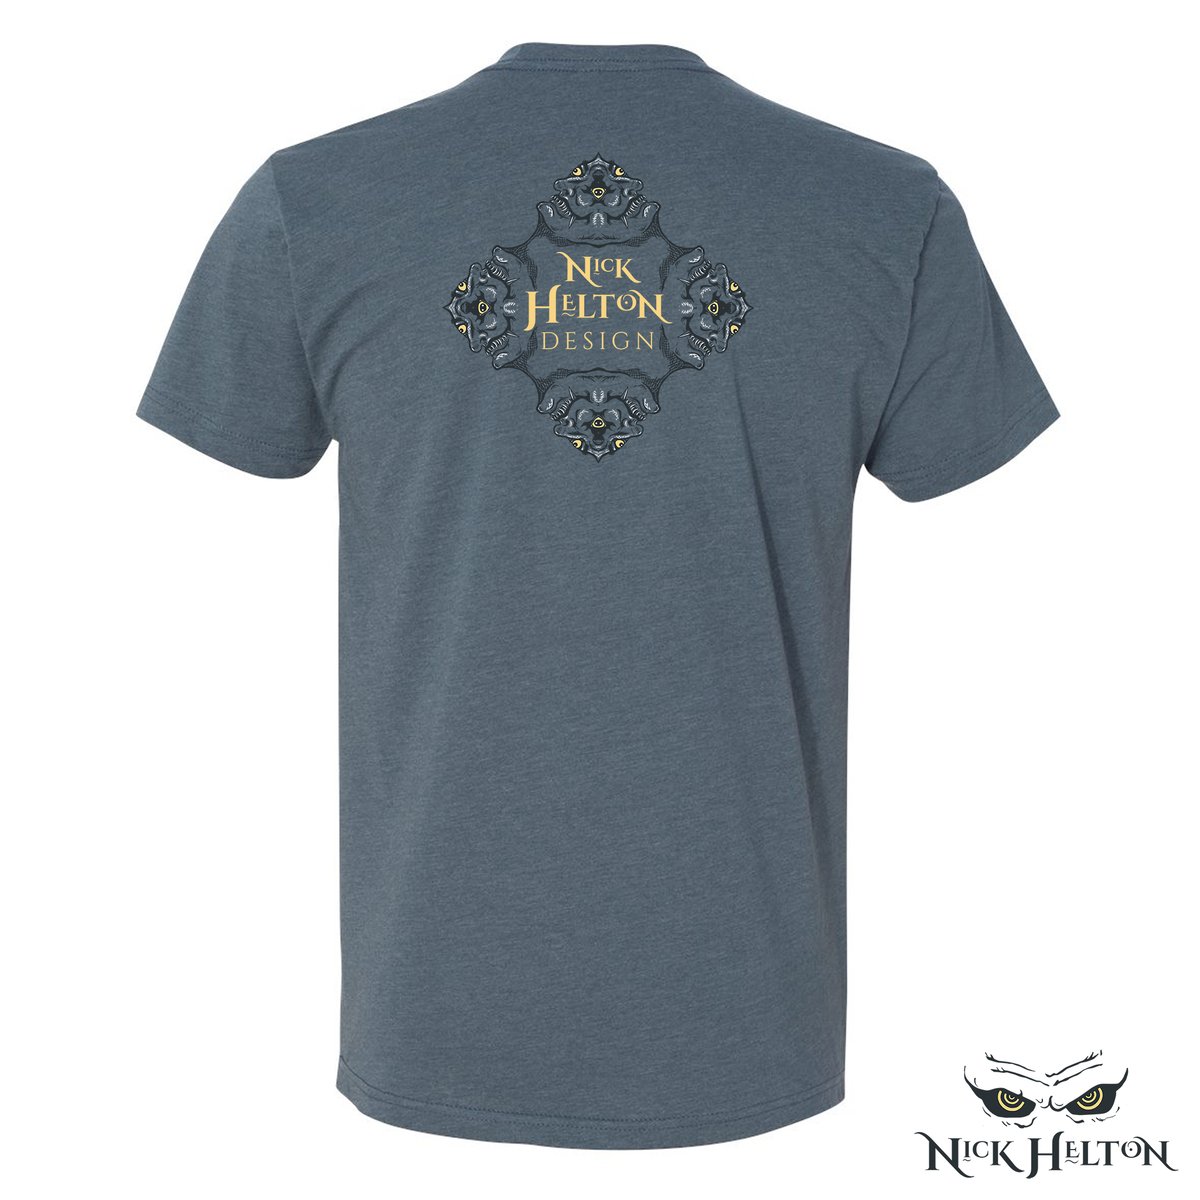 Image of "The Hypnotist" T-Shirt (Heathered Indigo)